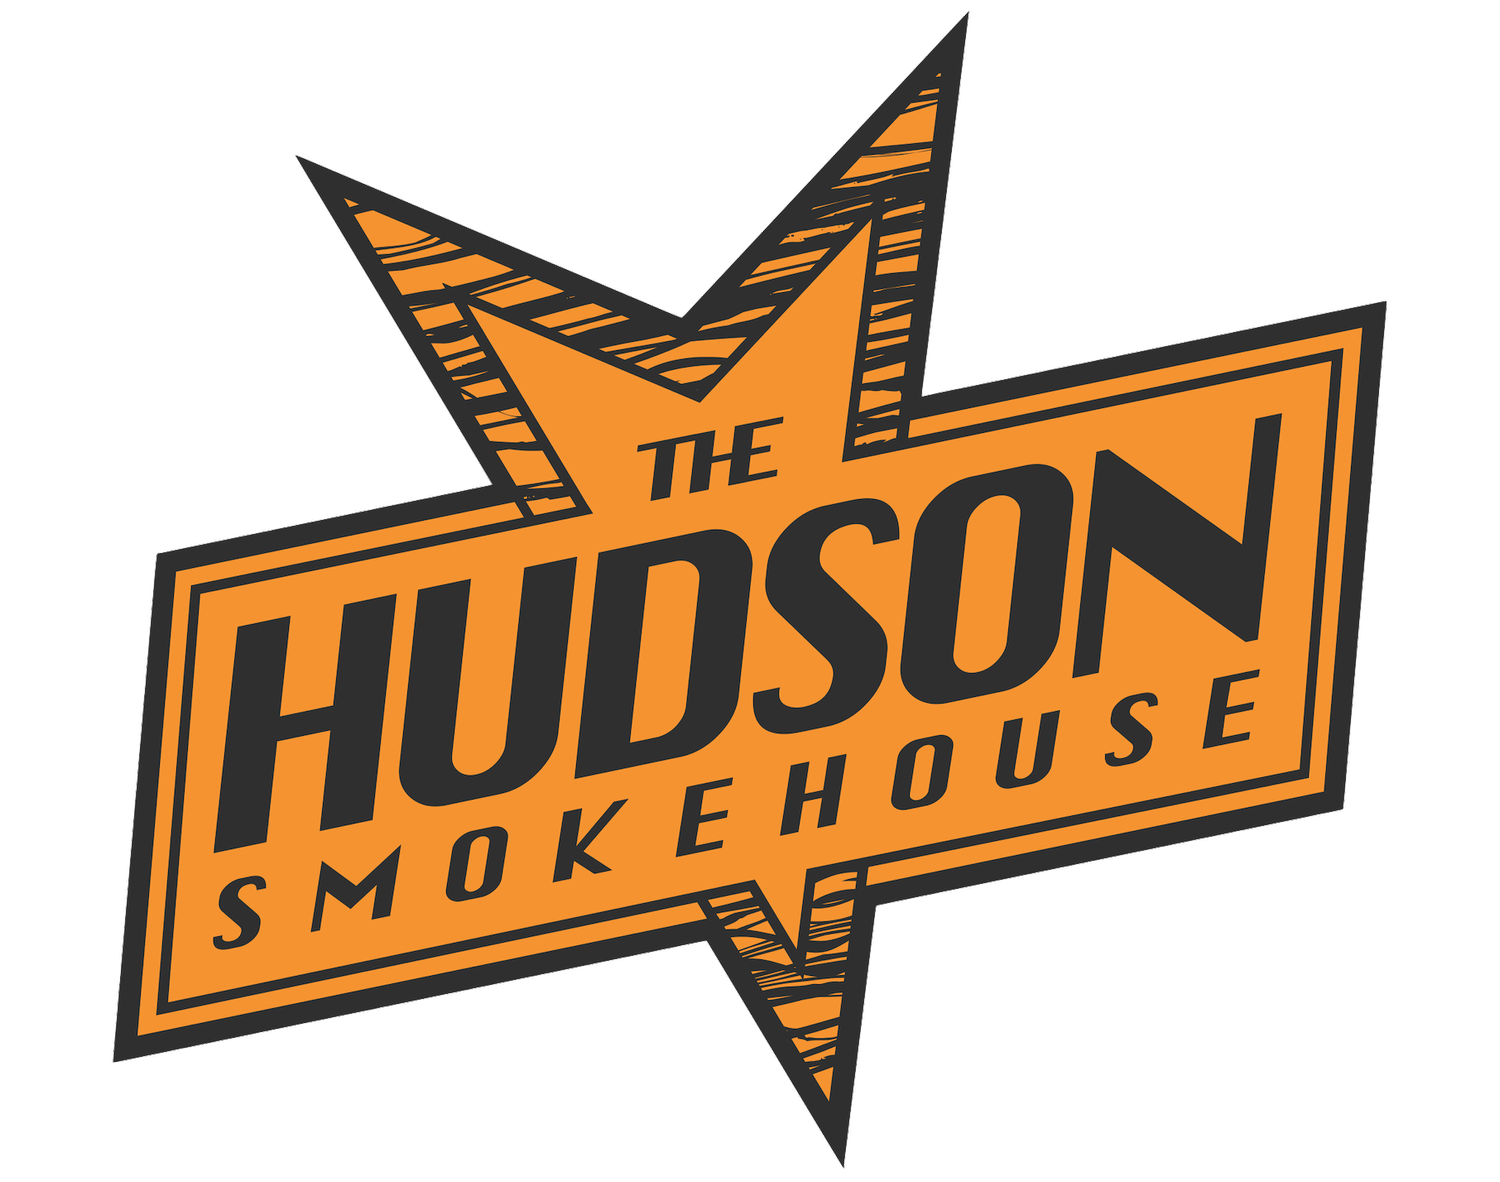 Hudson 218 - Smokehouse restaurant, barbecue cafe and bar in Ironton, Crosby, Cuyuna, MN